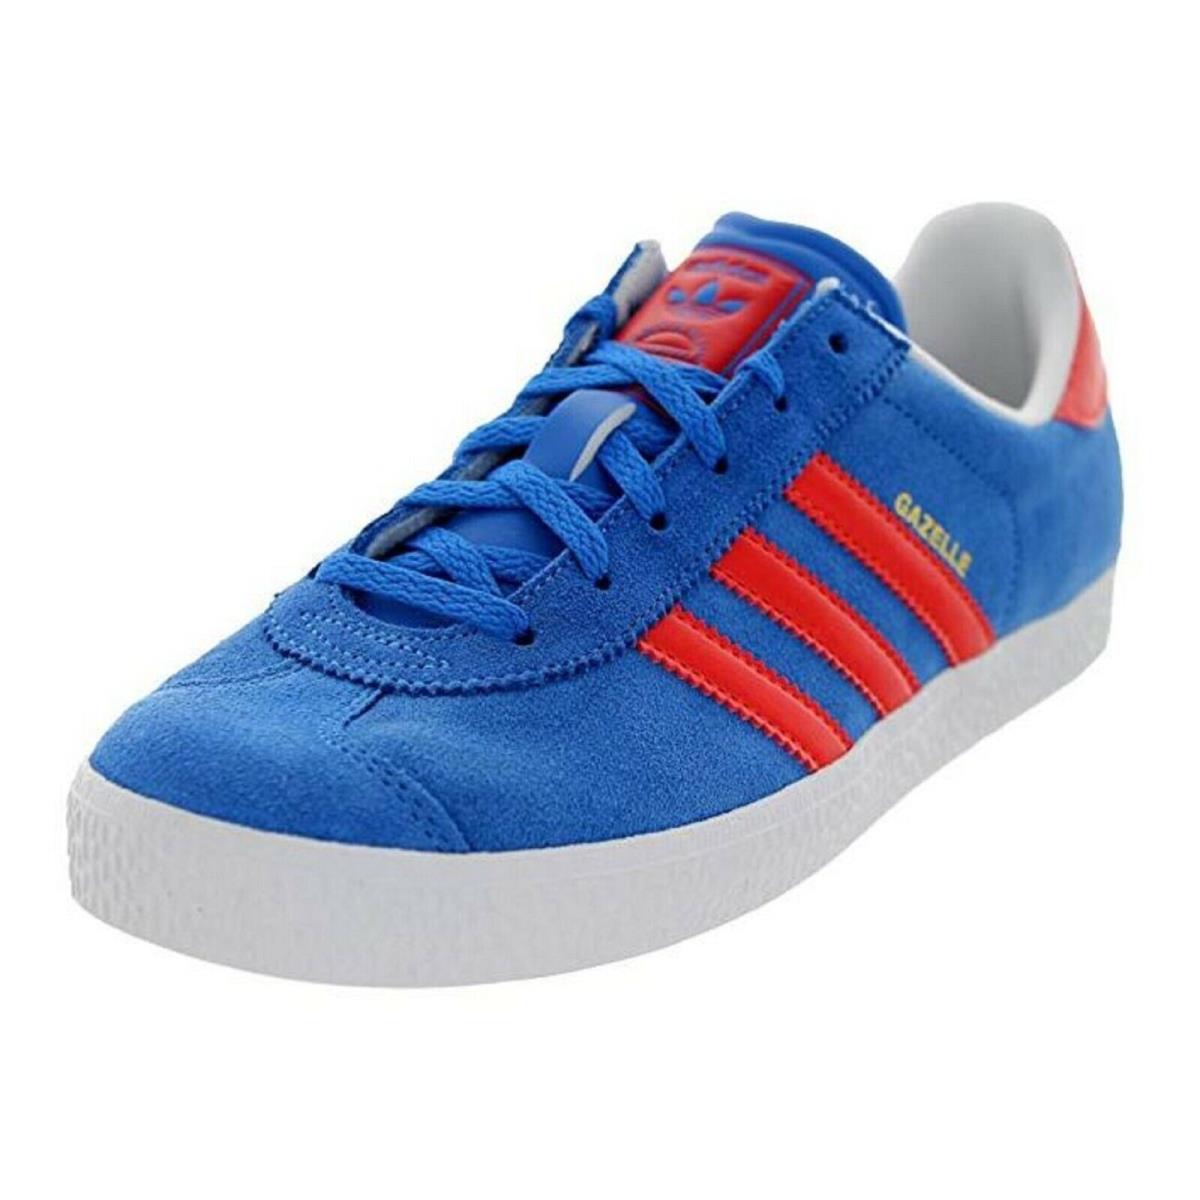 Adidas Big Kid Gazelle 2 J Suede Shoe Blue / Red / White G95464 - Black